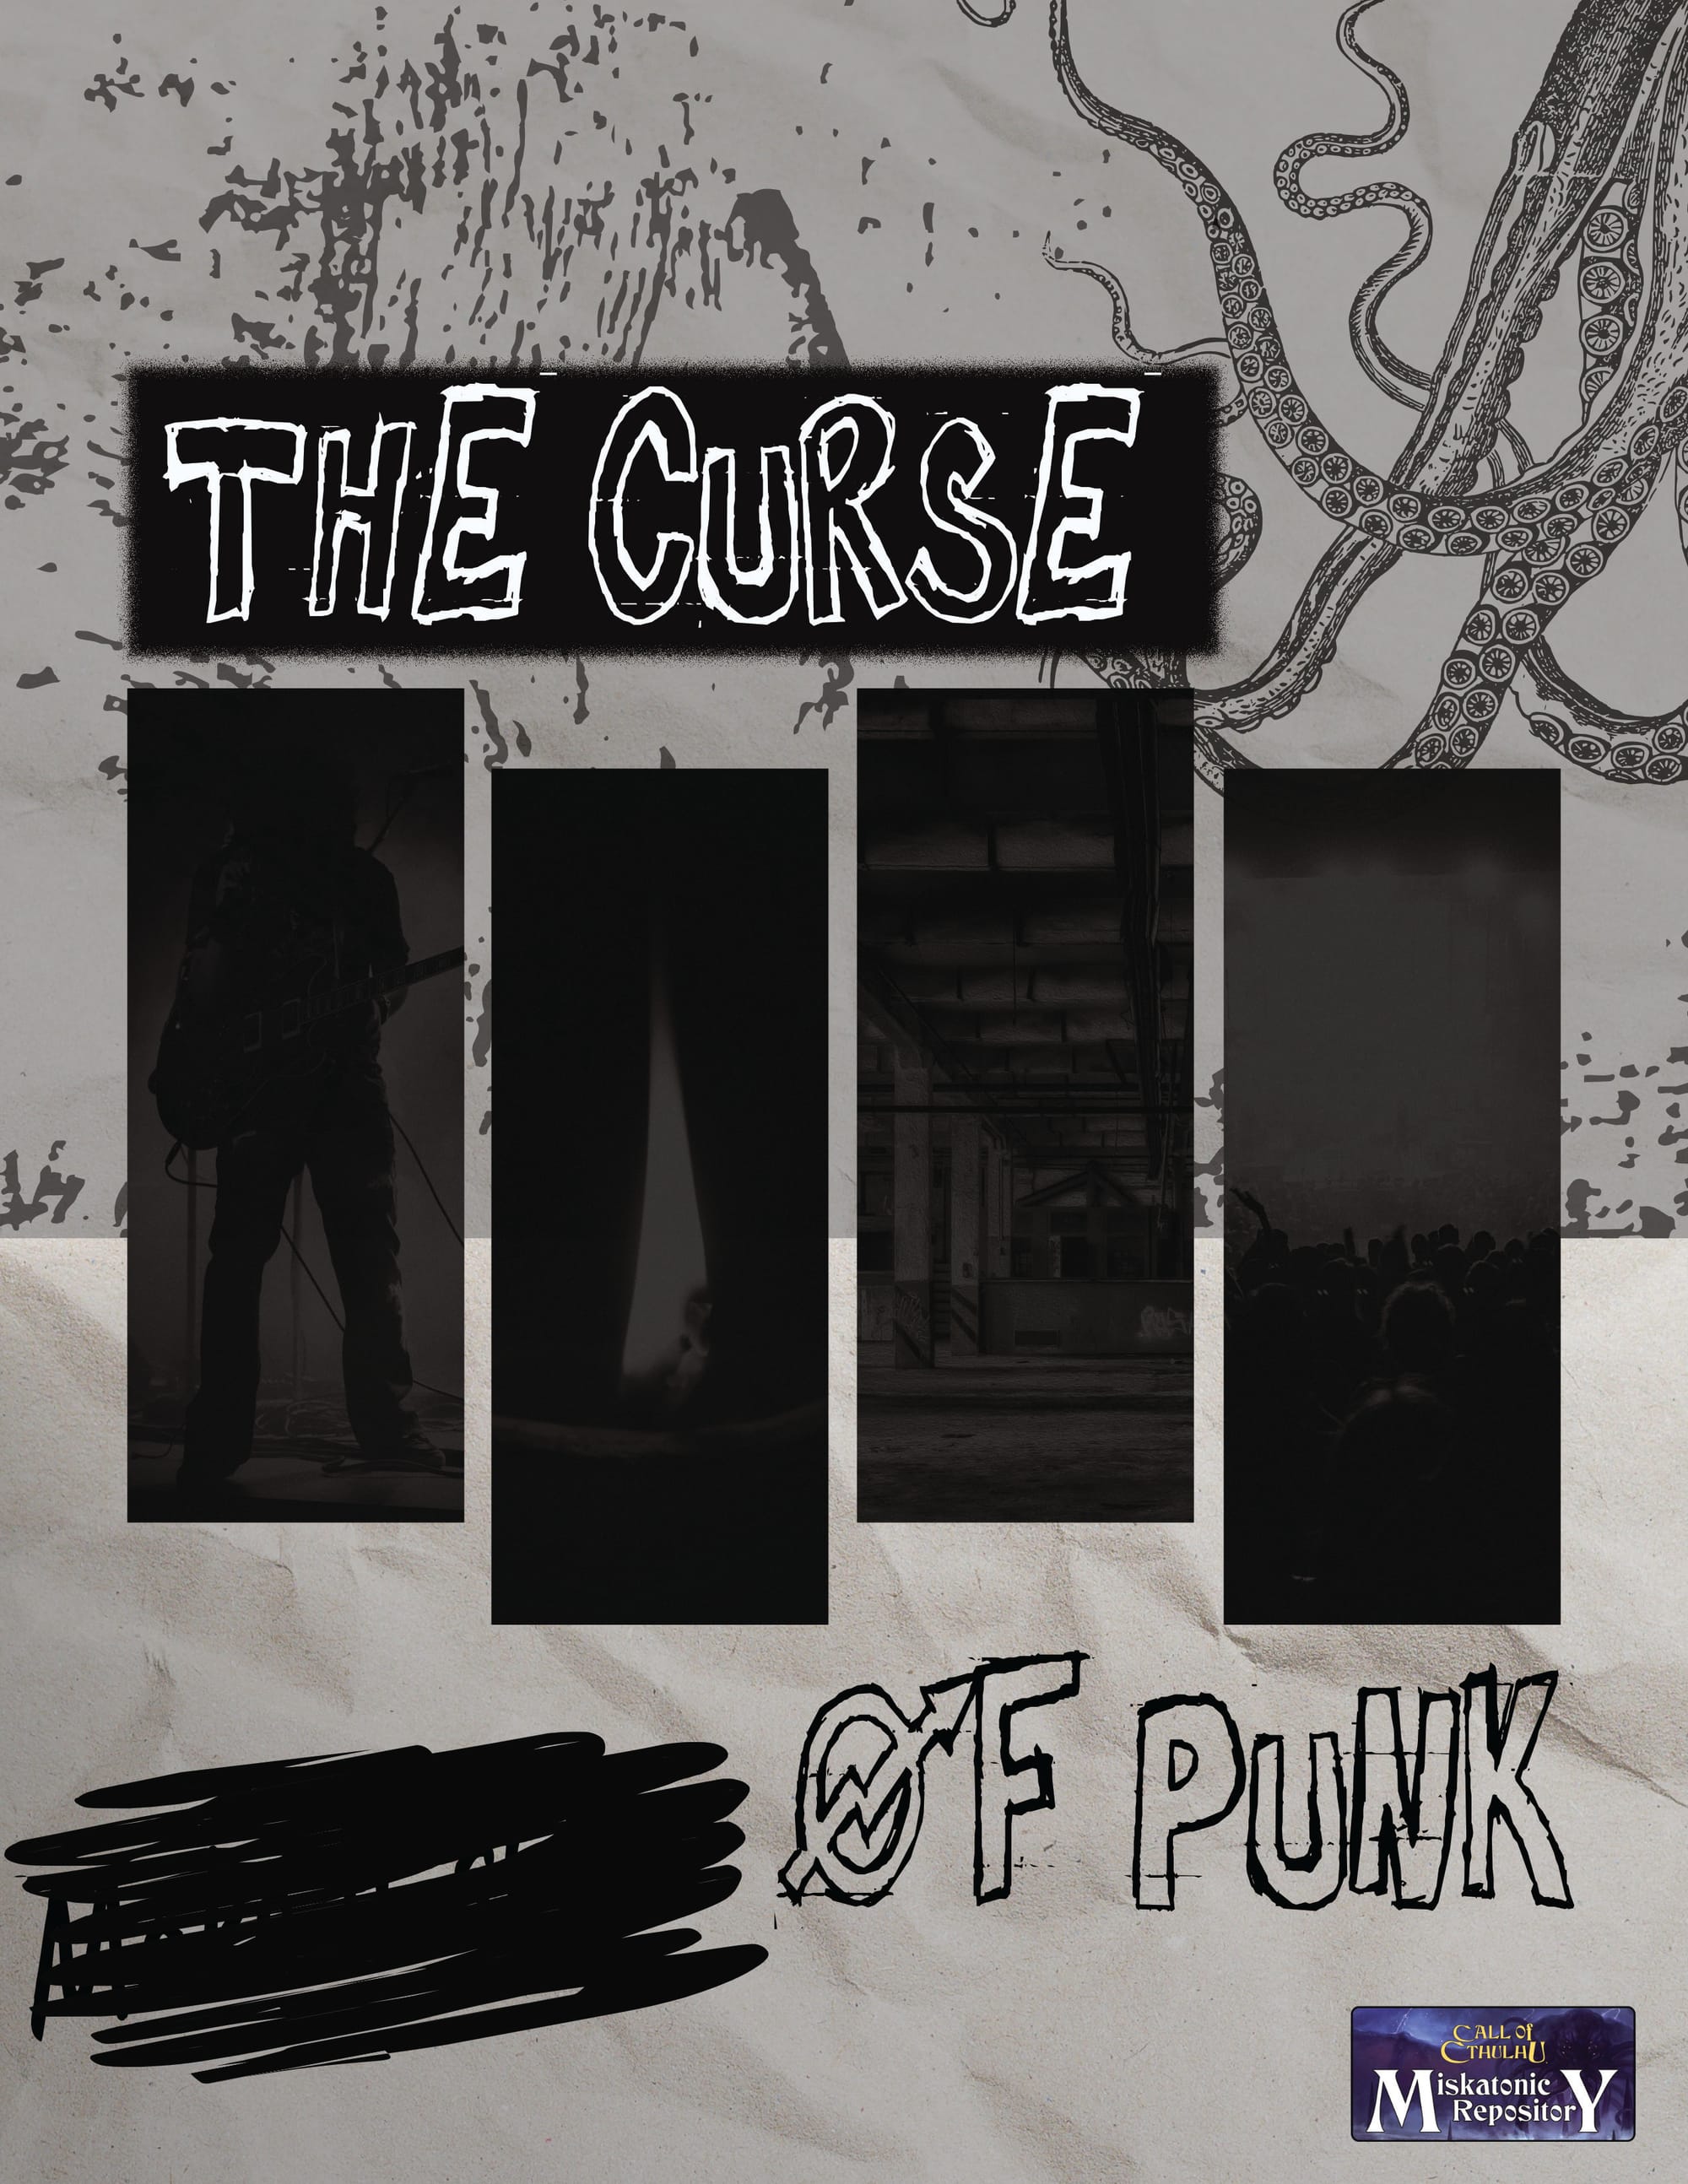 Punk Rock in the Cthulhu Mythos